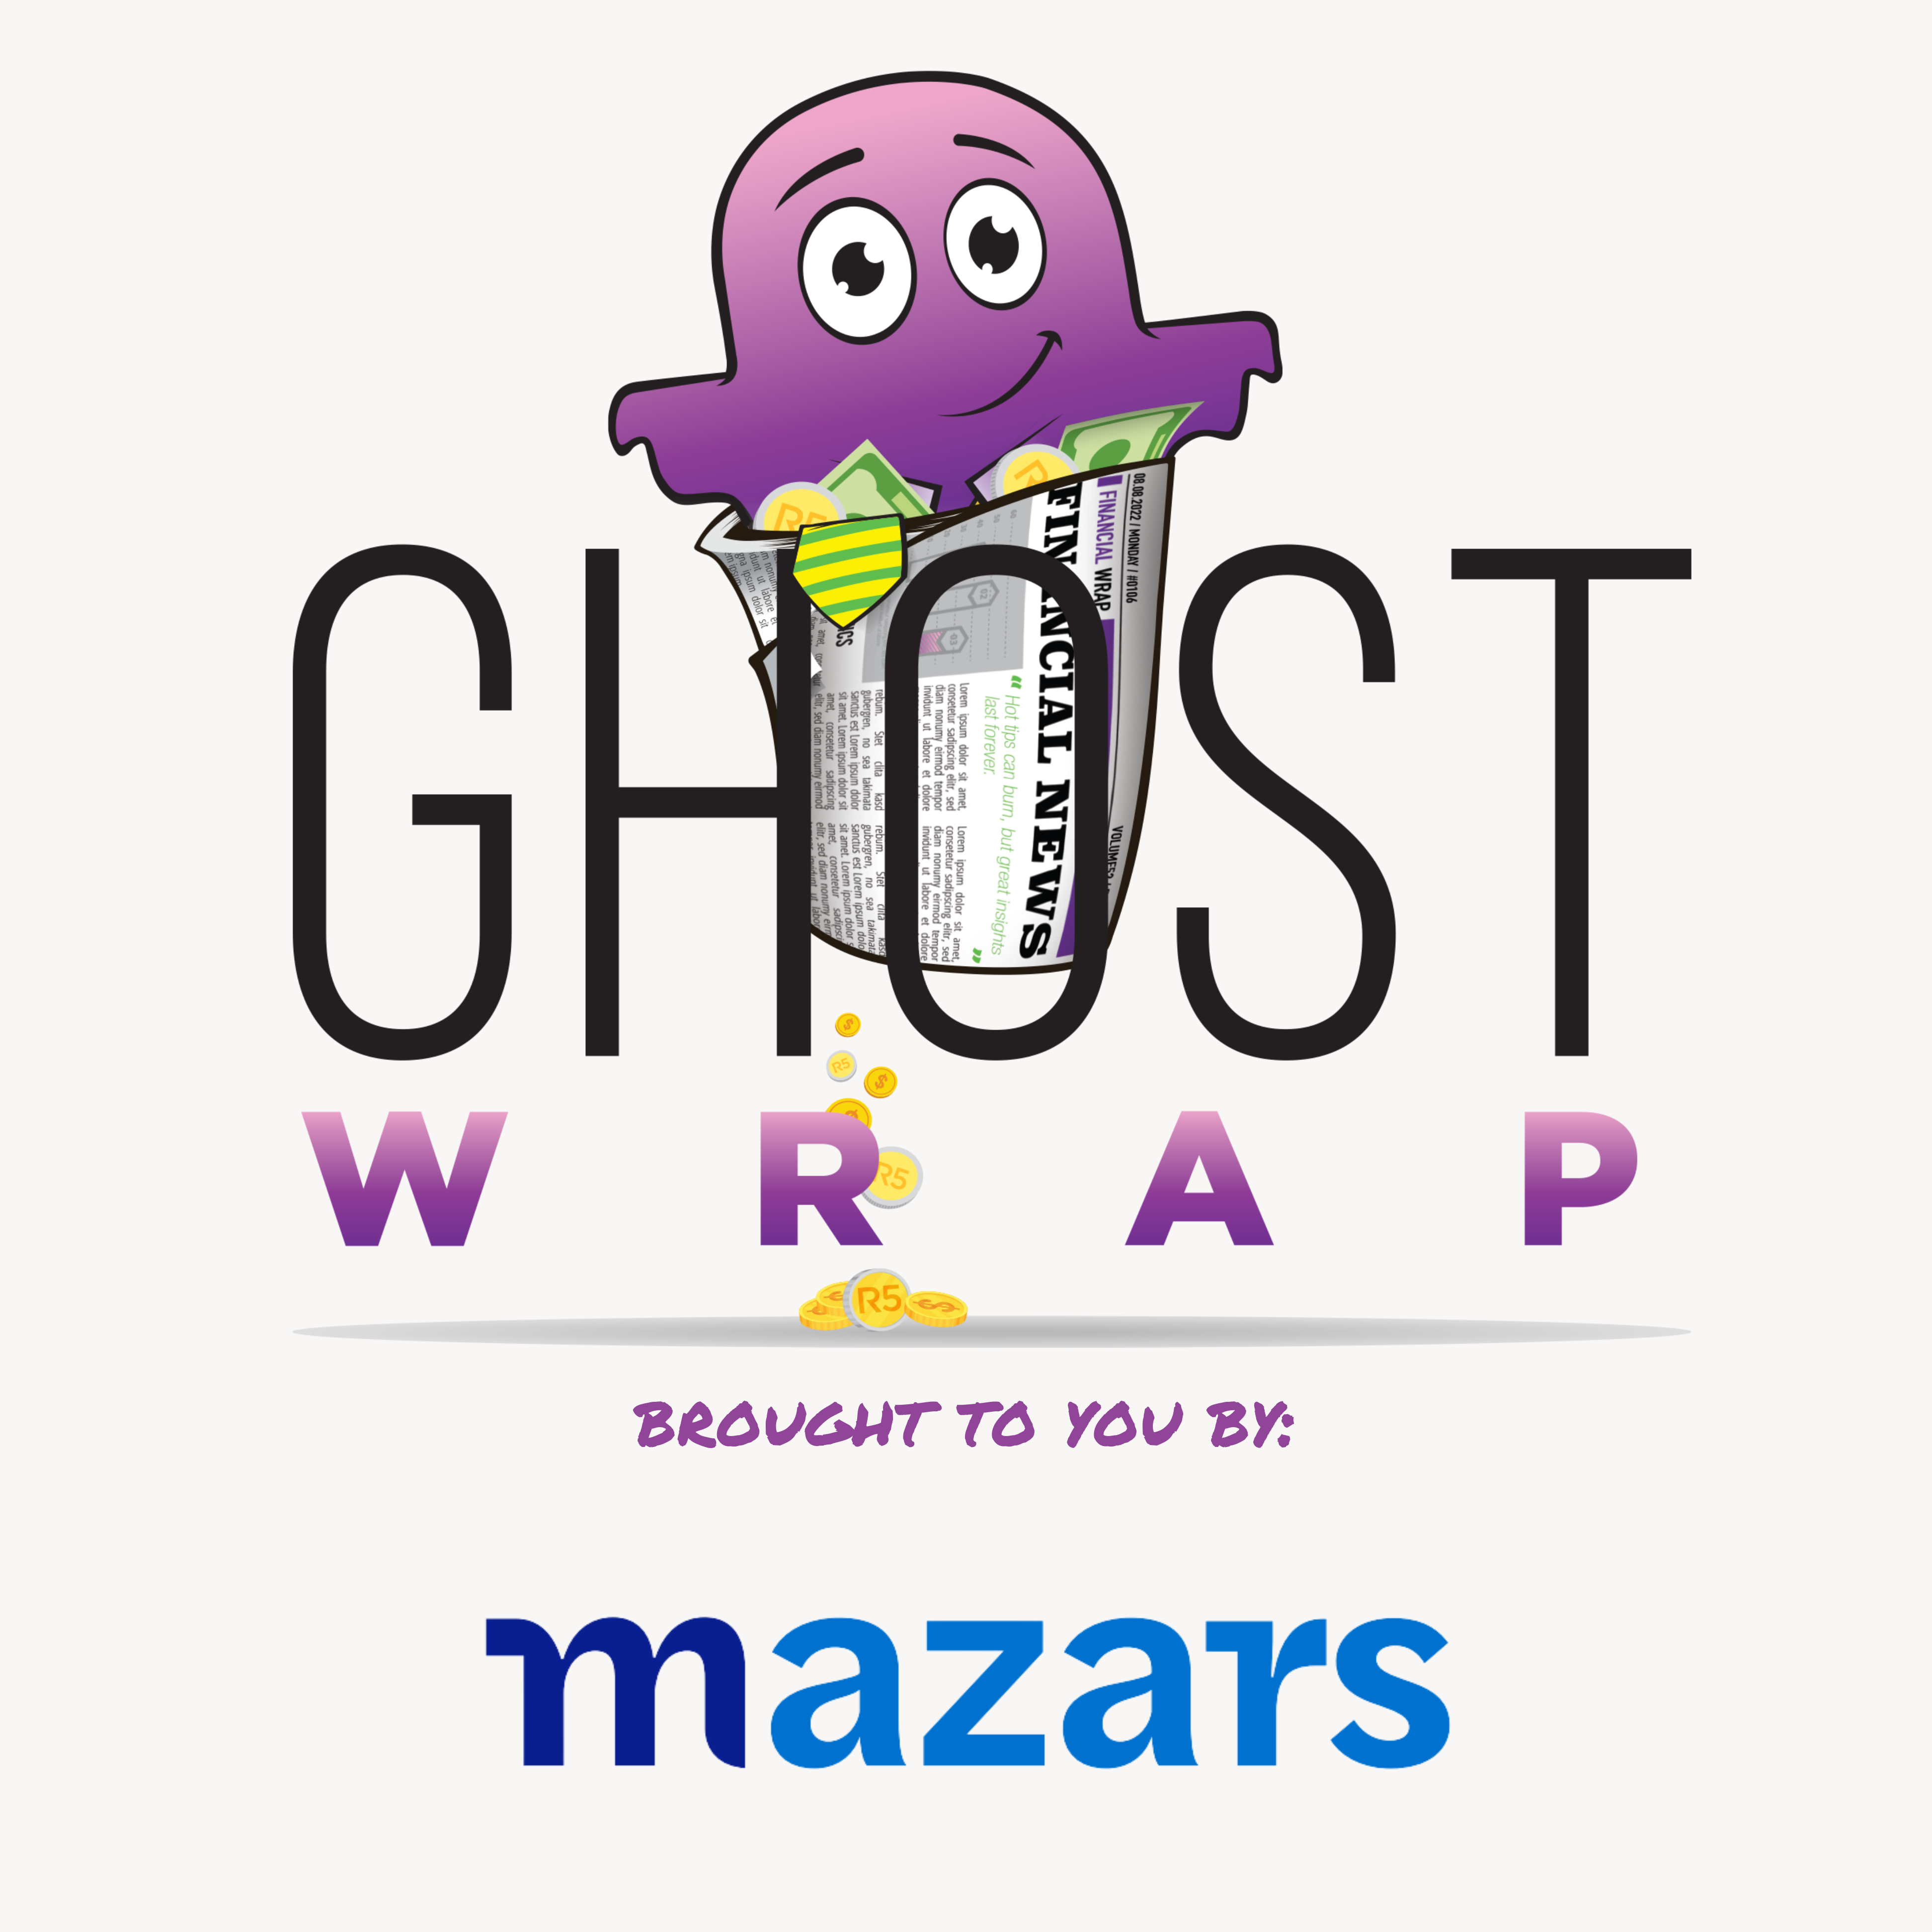 Ghost Wrap #3 (RFG Holdings | Prosus | Quantum Foods | Fortress REIT | Mr Price | Telkom | Pepkor | Bidcorp)